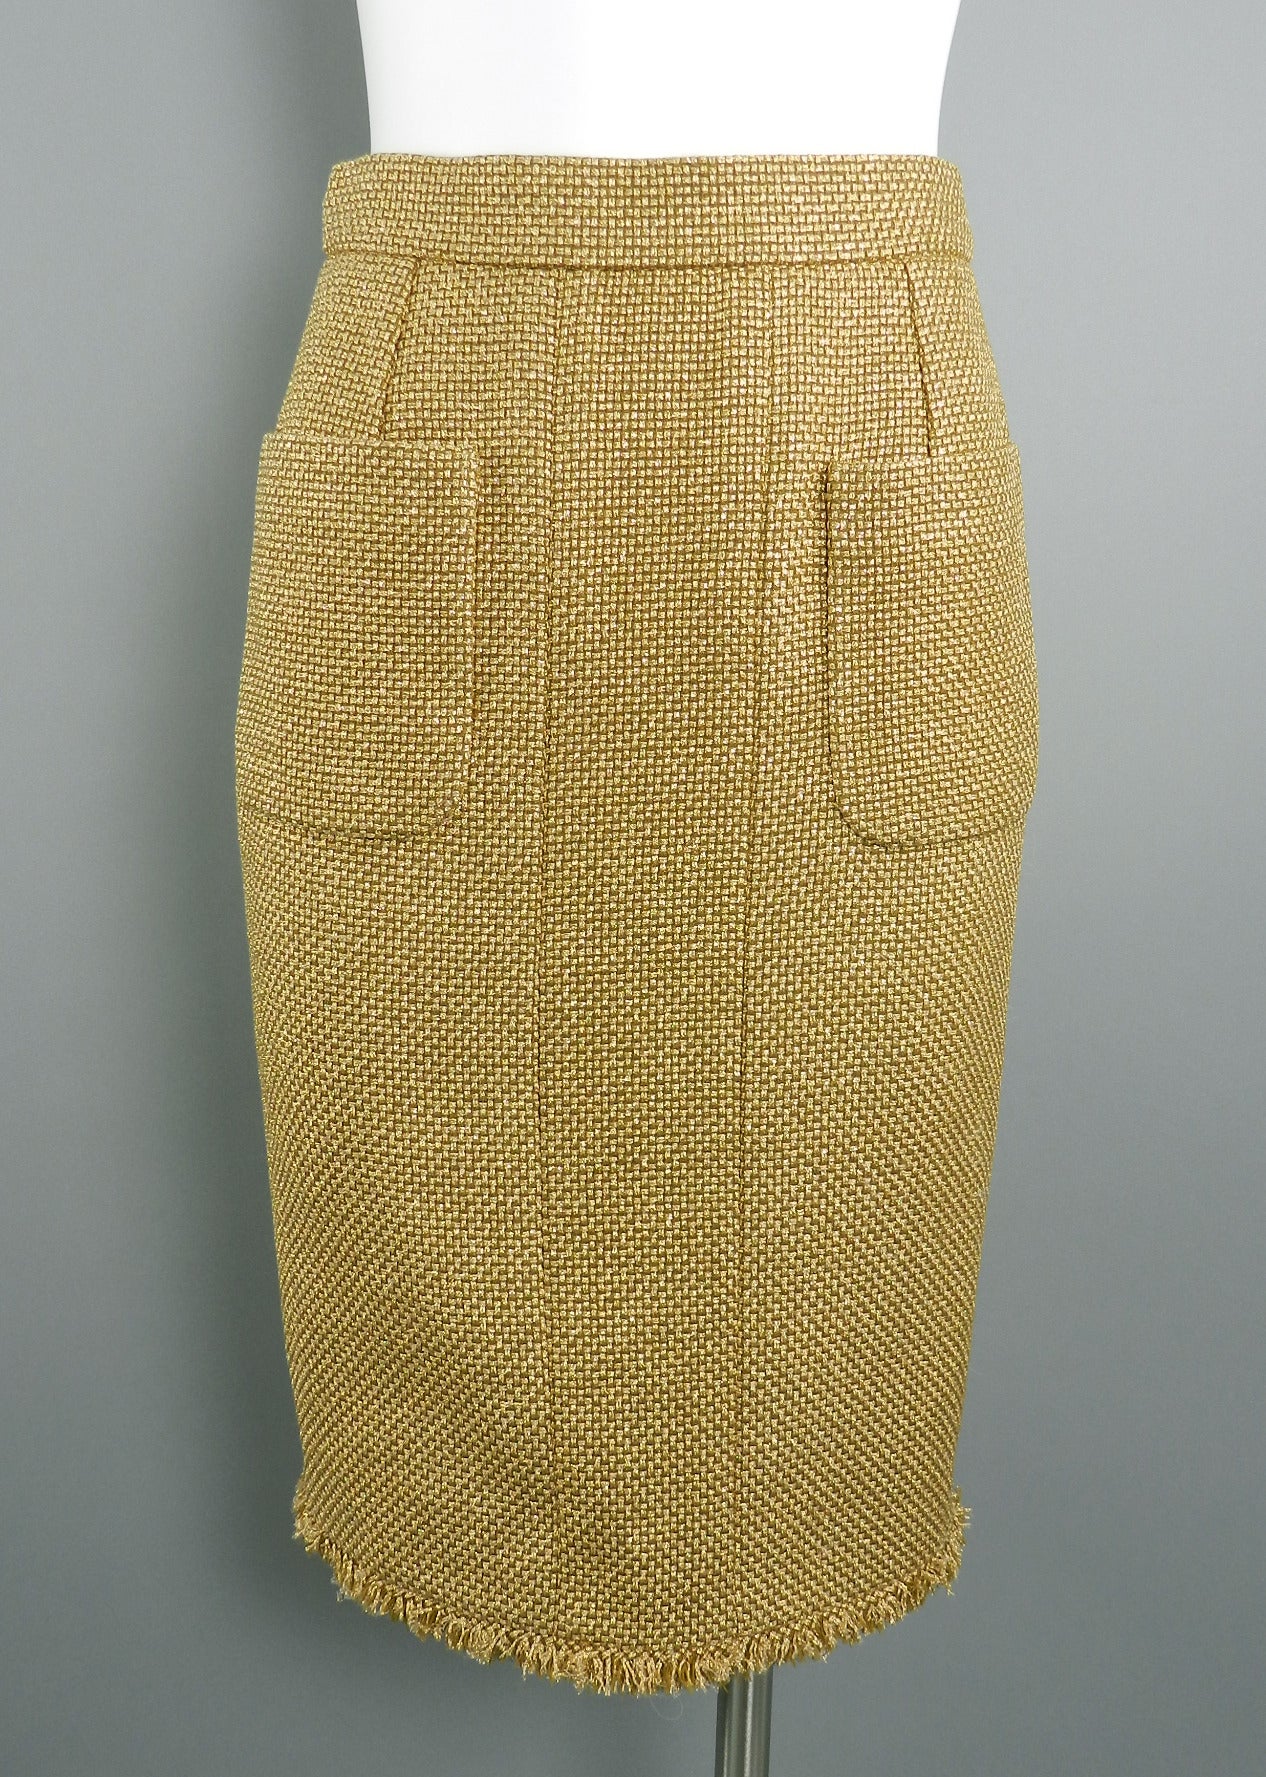 Chanel Gold Metallic Tweed Skirt Suit 4